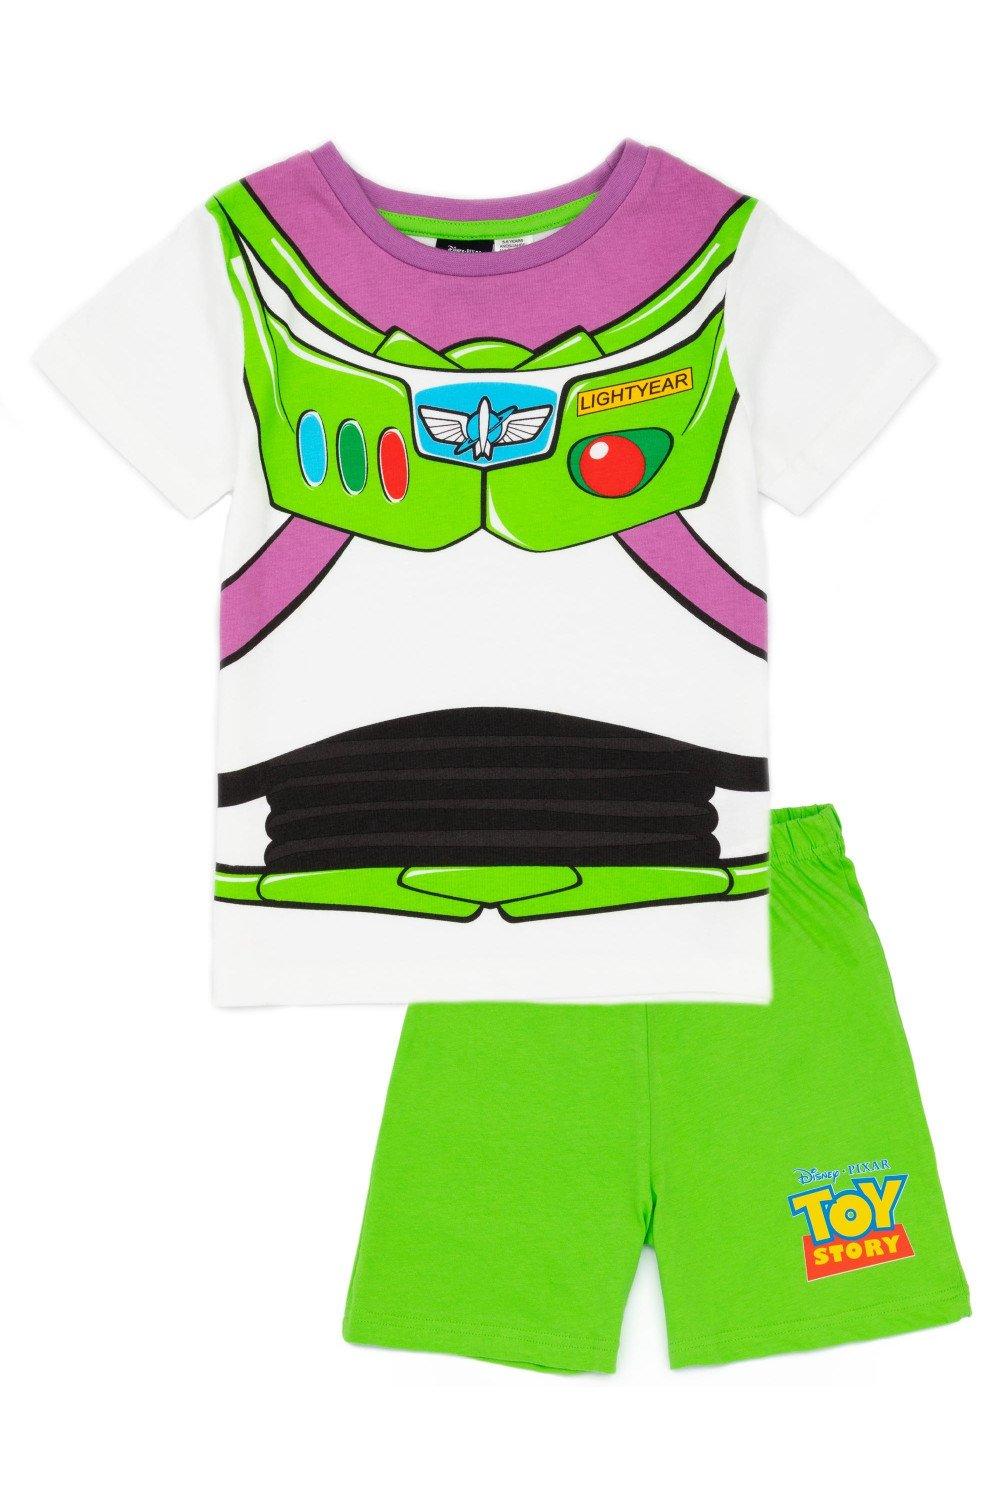 Buzz Lightyear Costume Short Pyjama Set